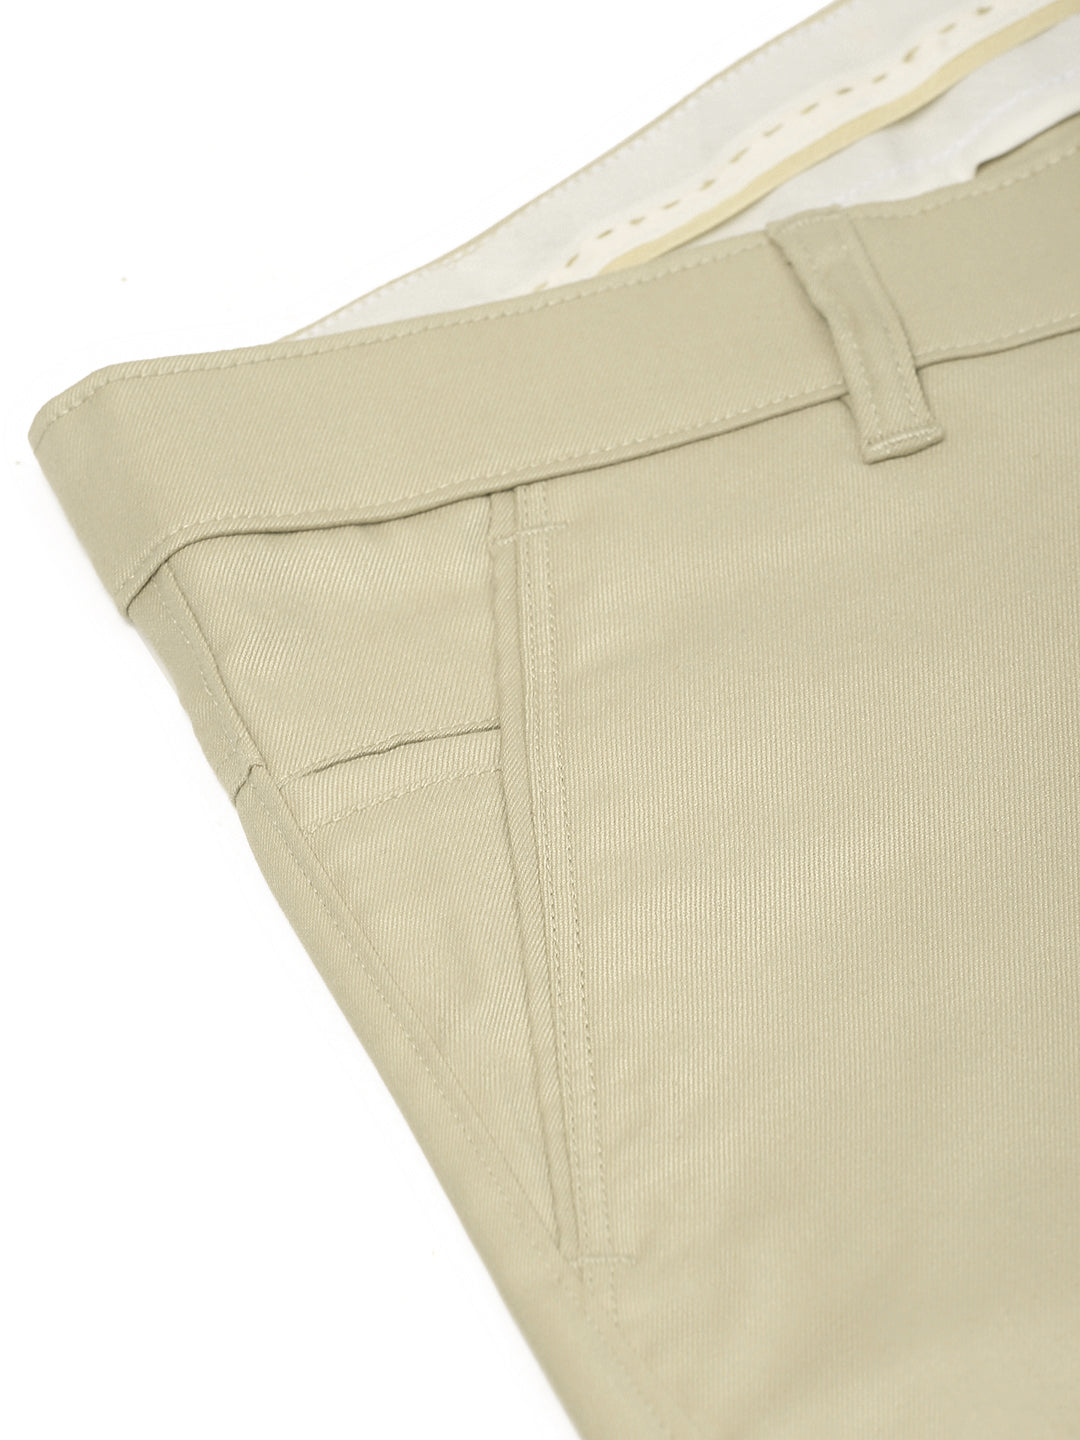 Jainish Men's Casual Cotton Solid Shorts